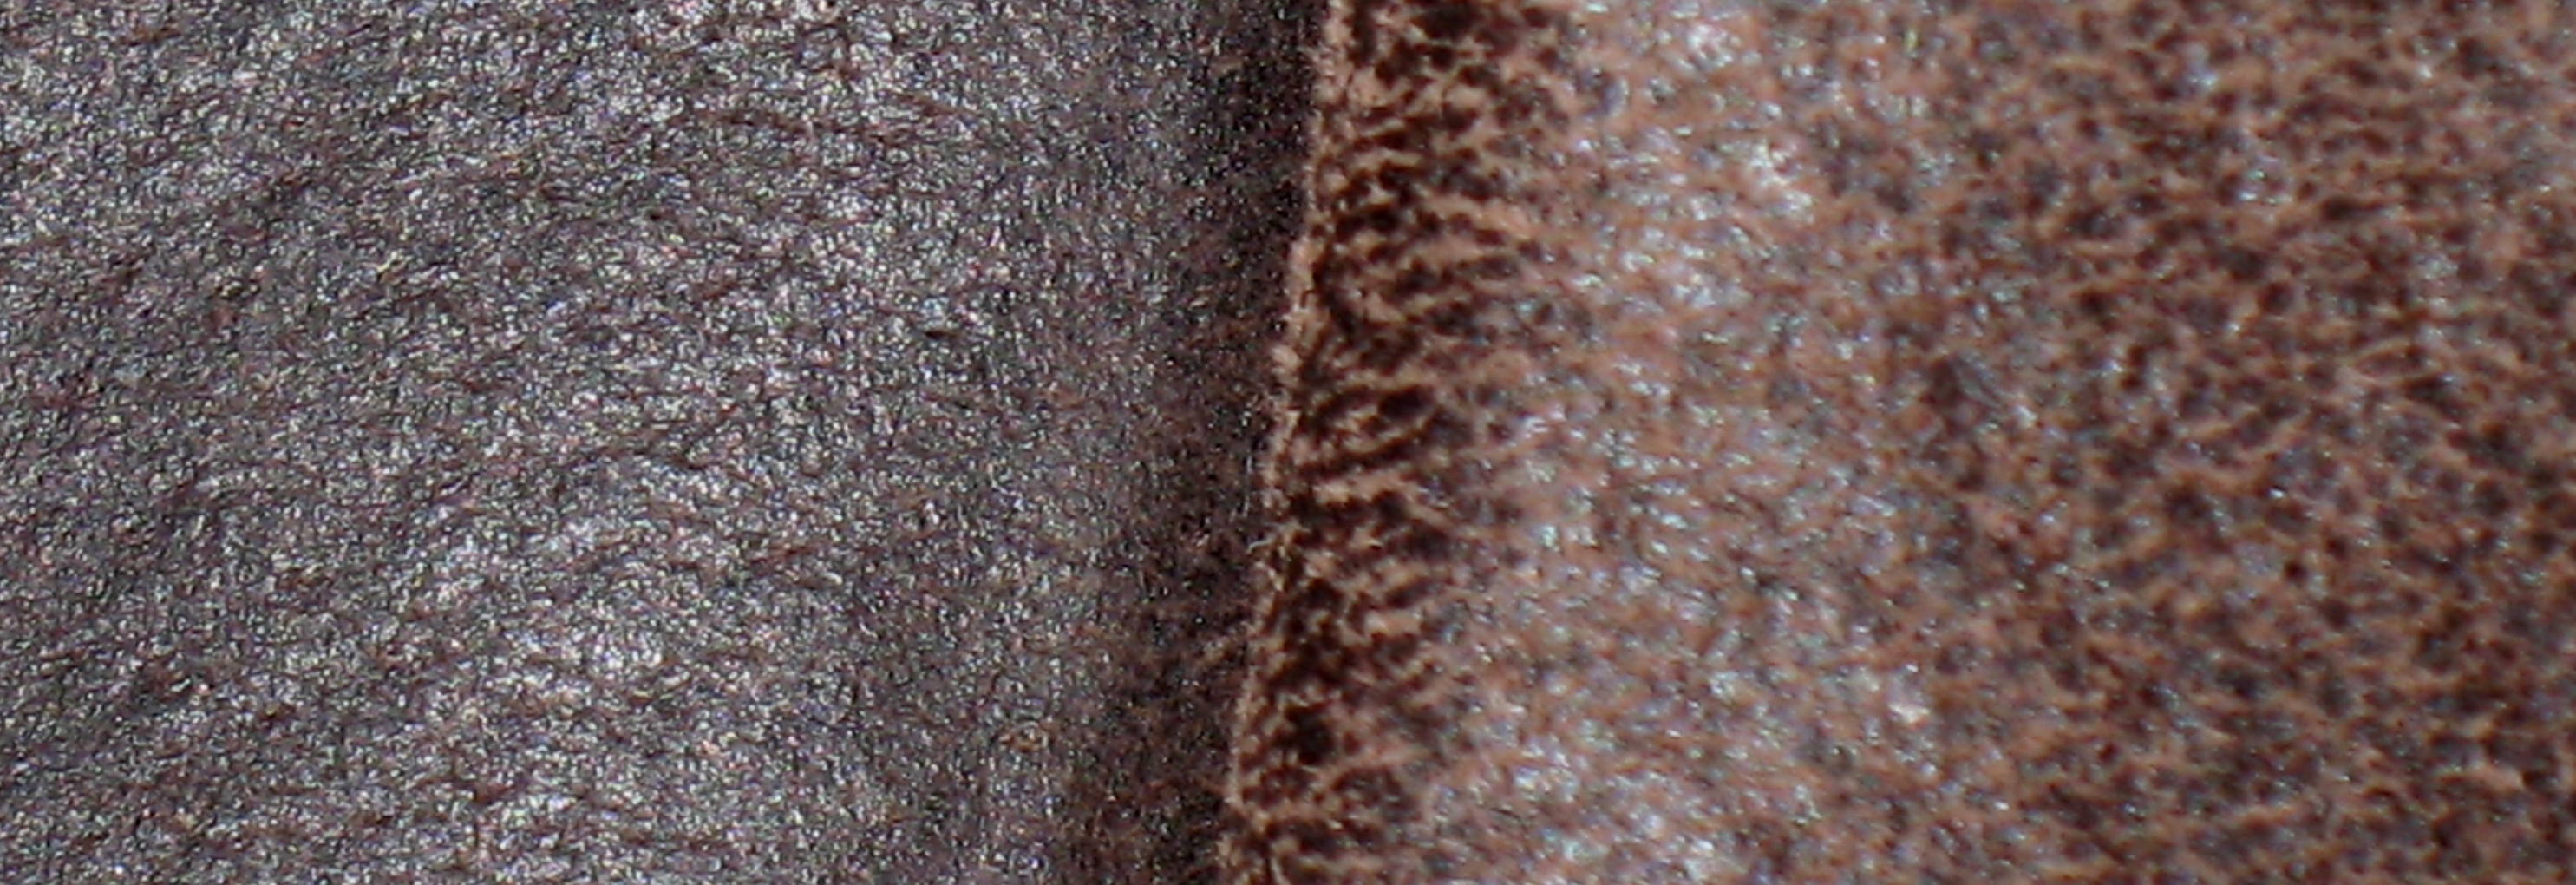 dredged leather skinning